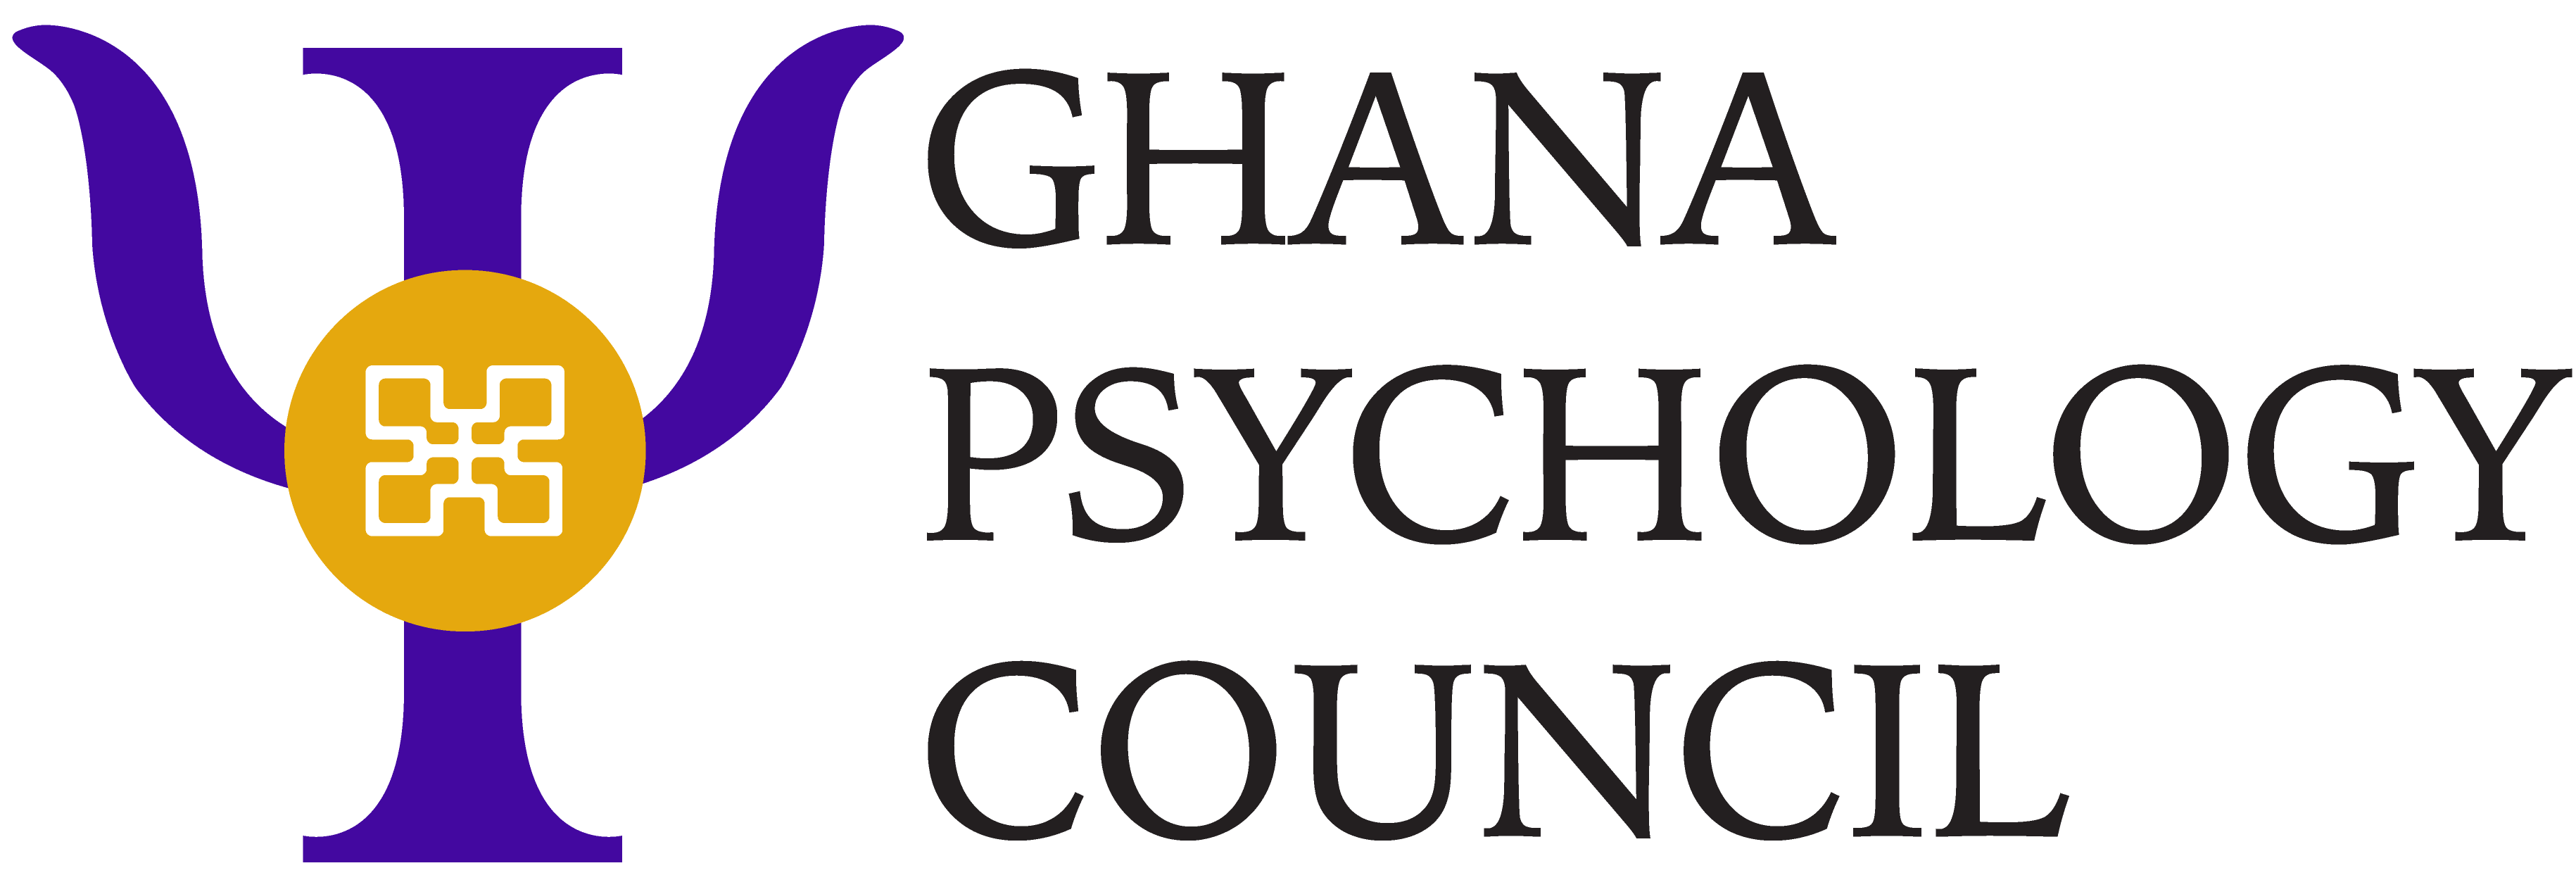 Ghana Psychology Council